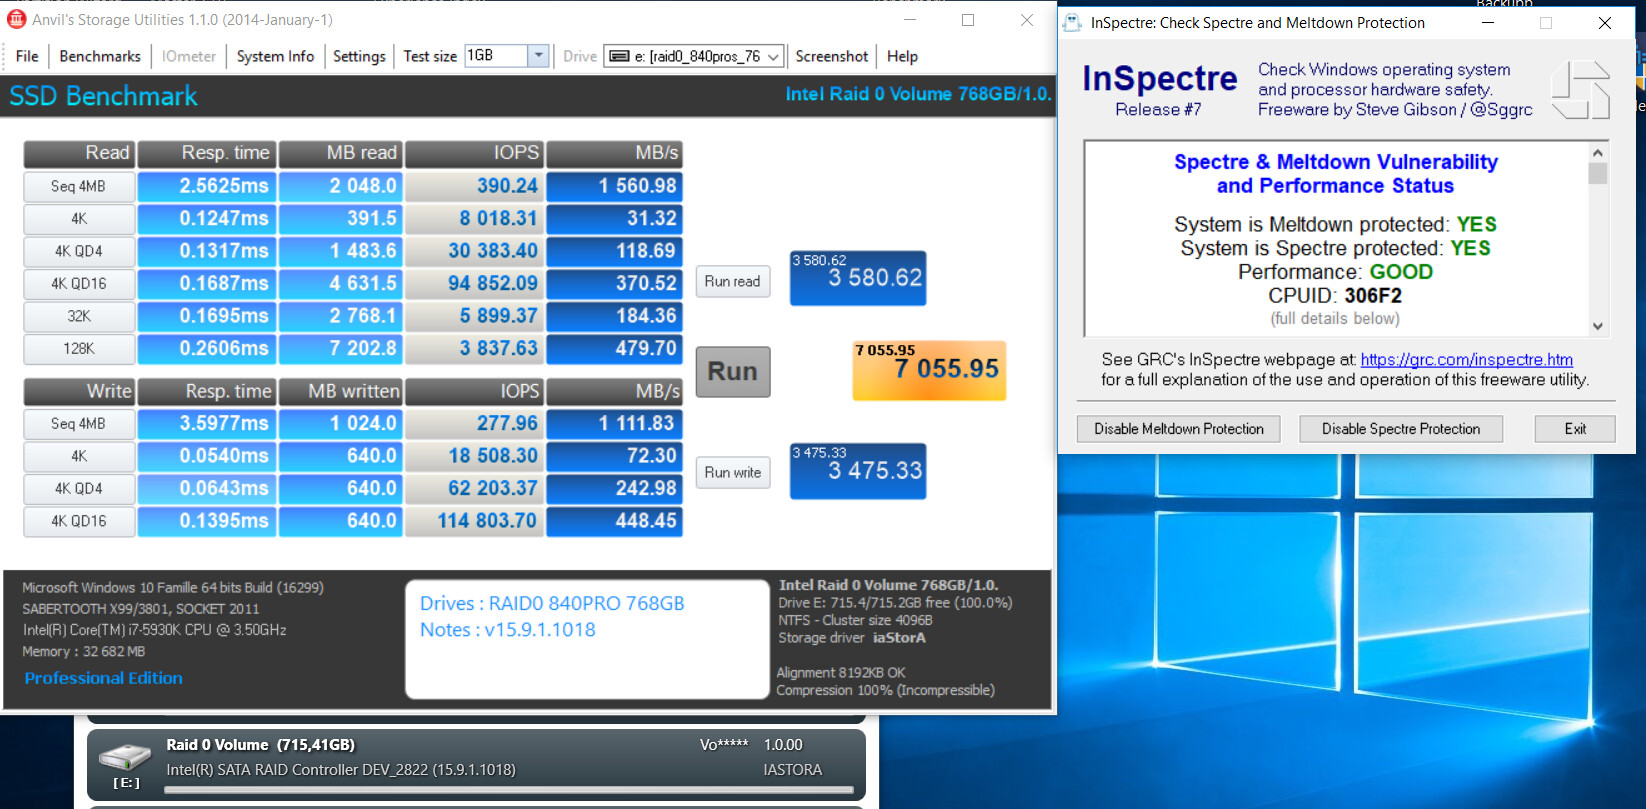 ANVIL_RAID0_840PRO_768GB_SpectreProtection_enabled_26mars18.PNG.jpg